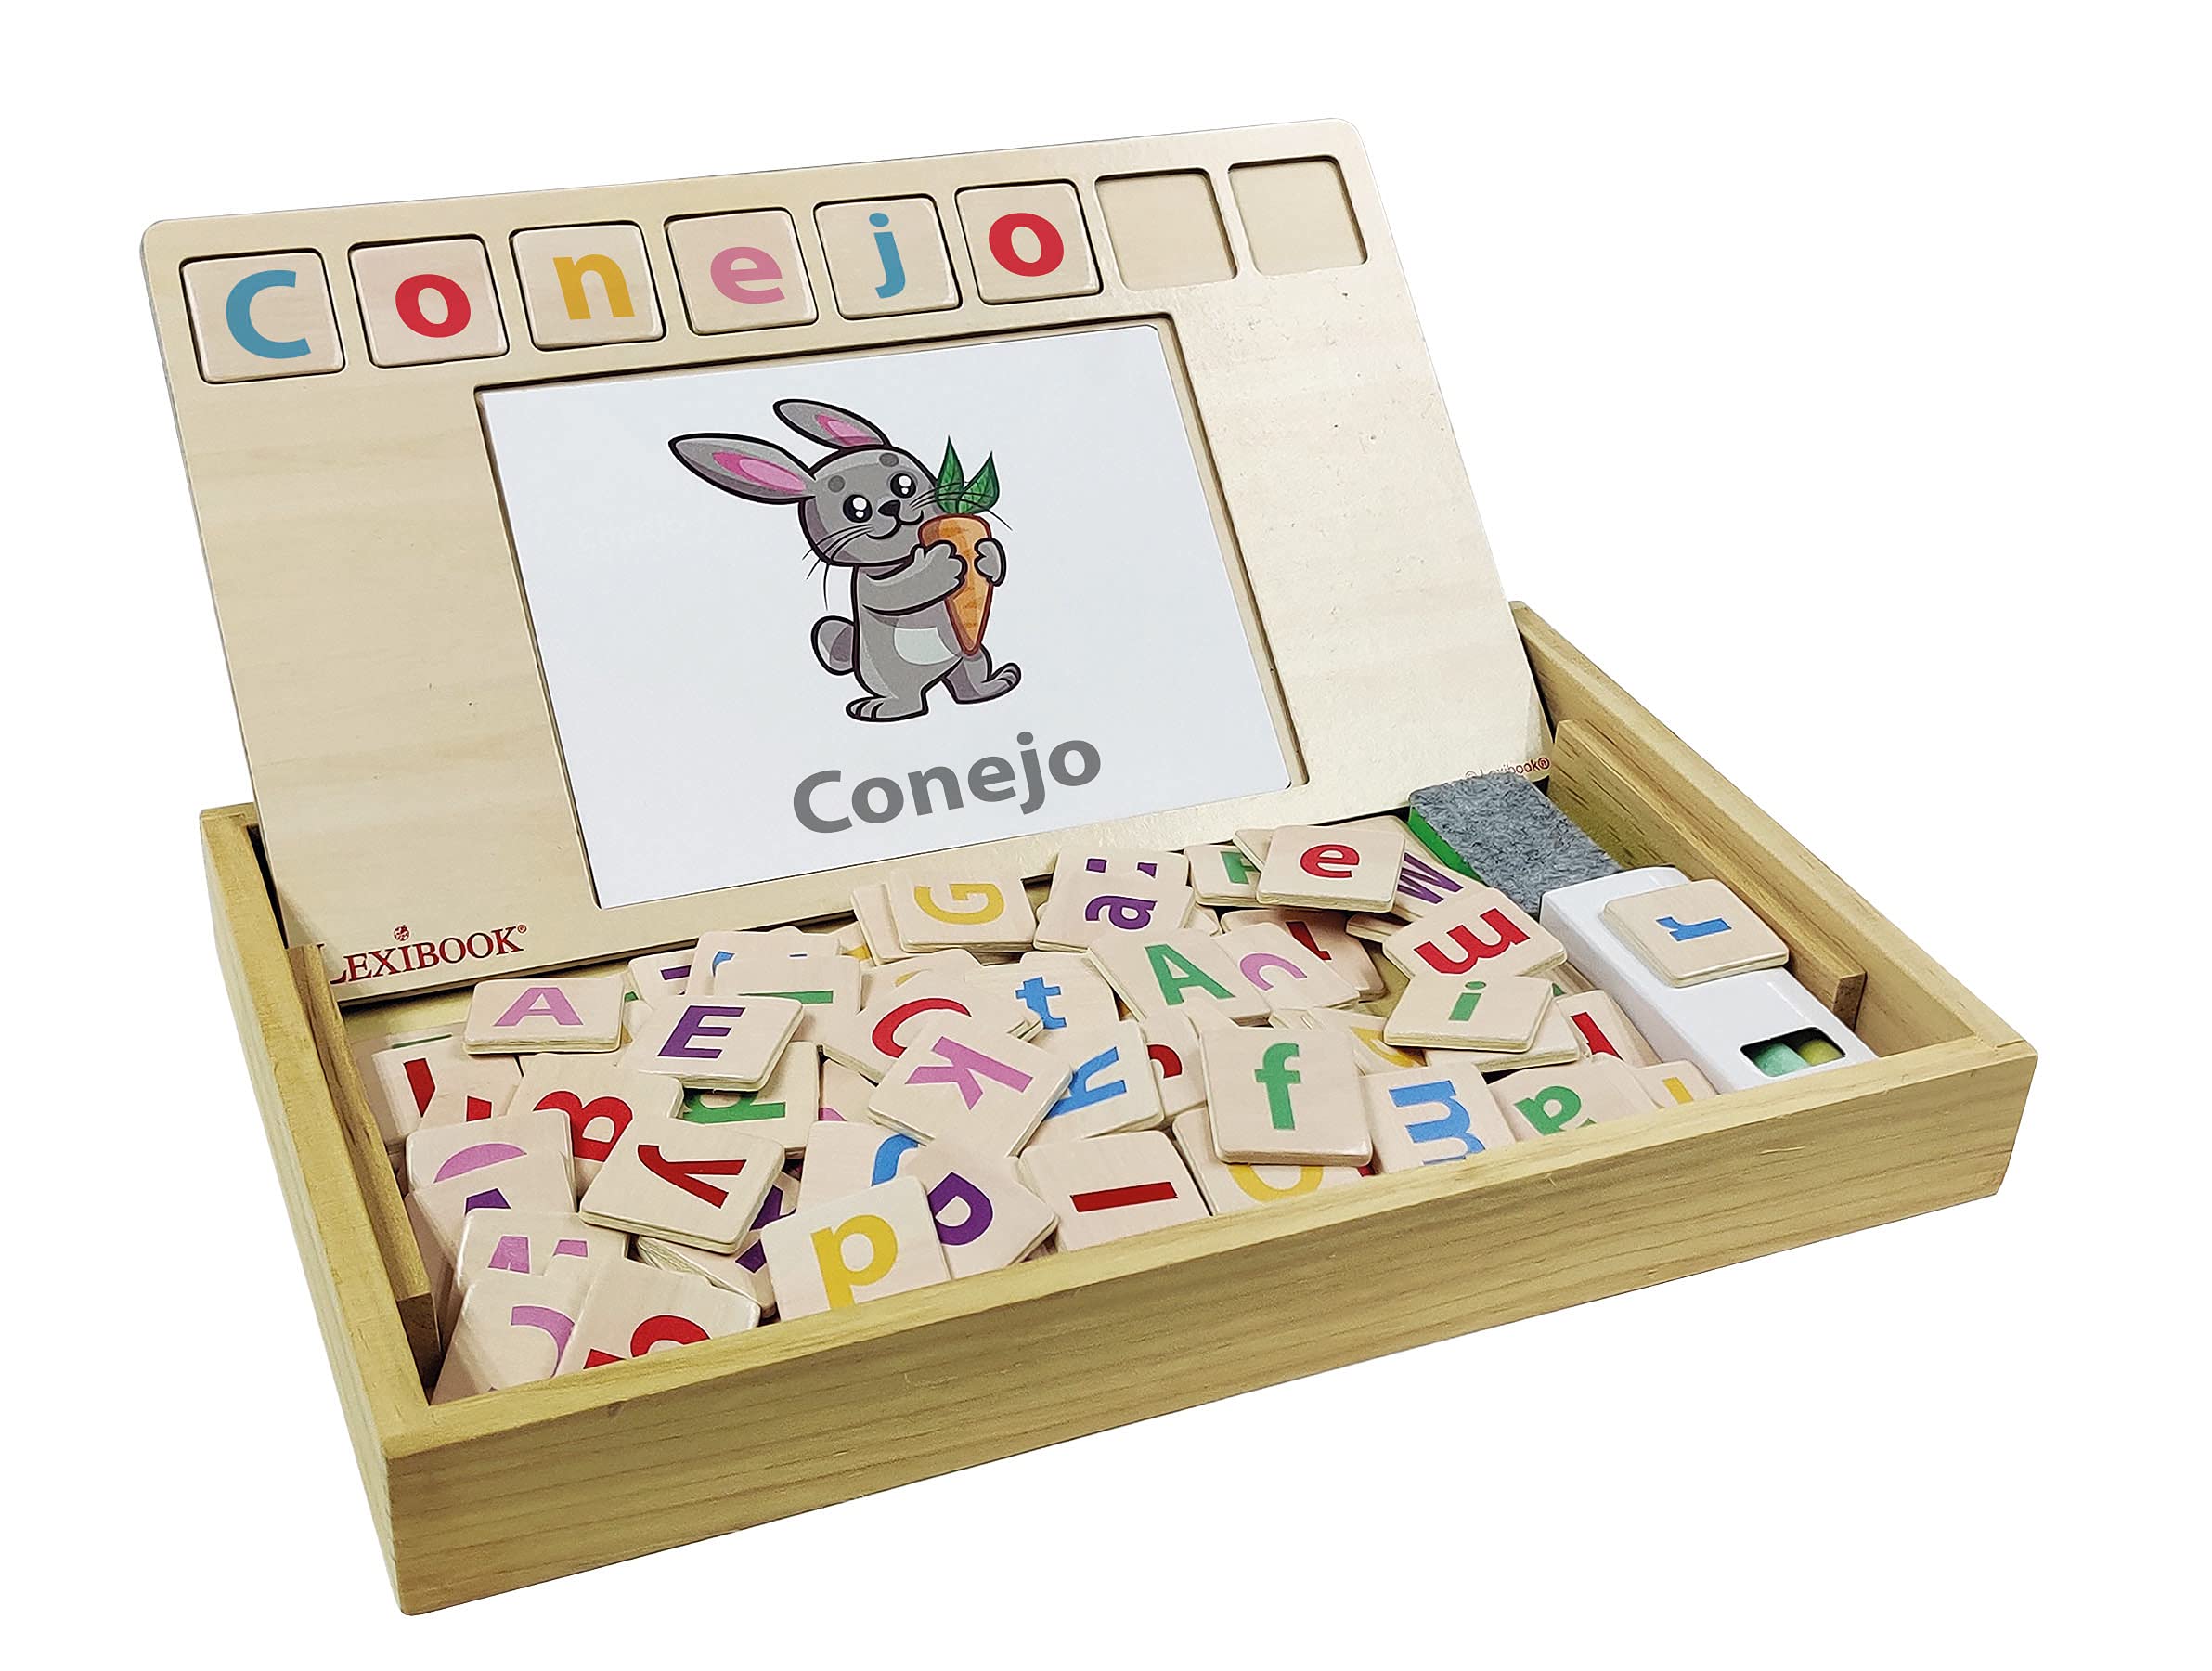 LEXIBOOK EDU100i2 Bio Toys School, Bilingual Spanish/English, Wooden, 50 Word Cards, Alphabet, Educational Game